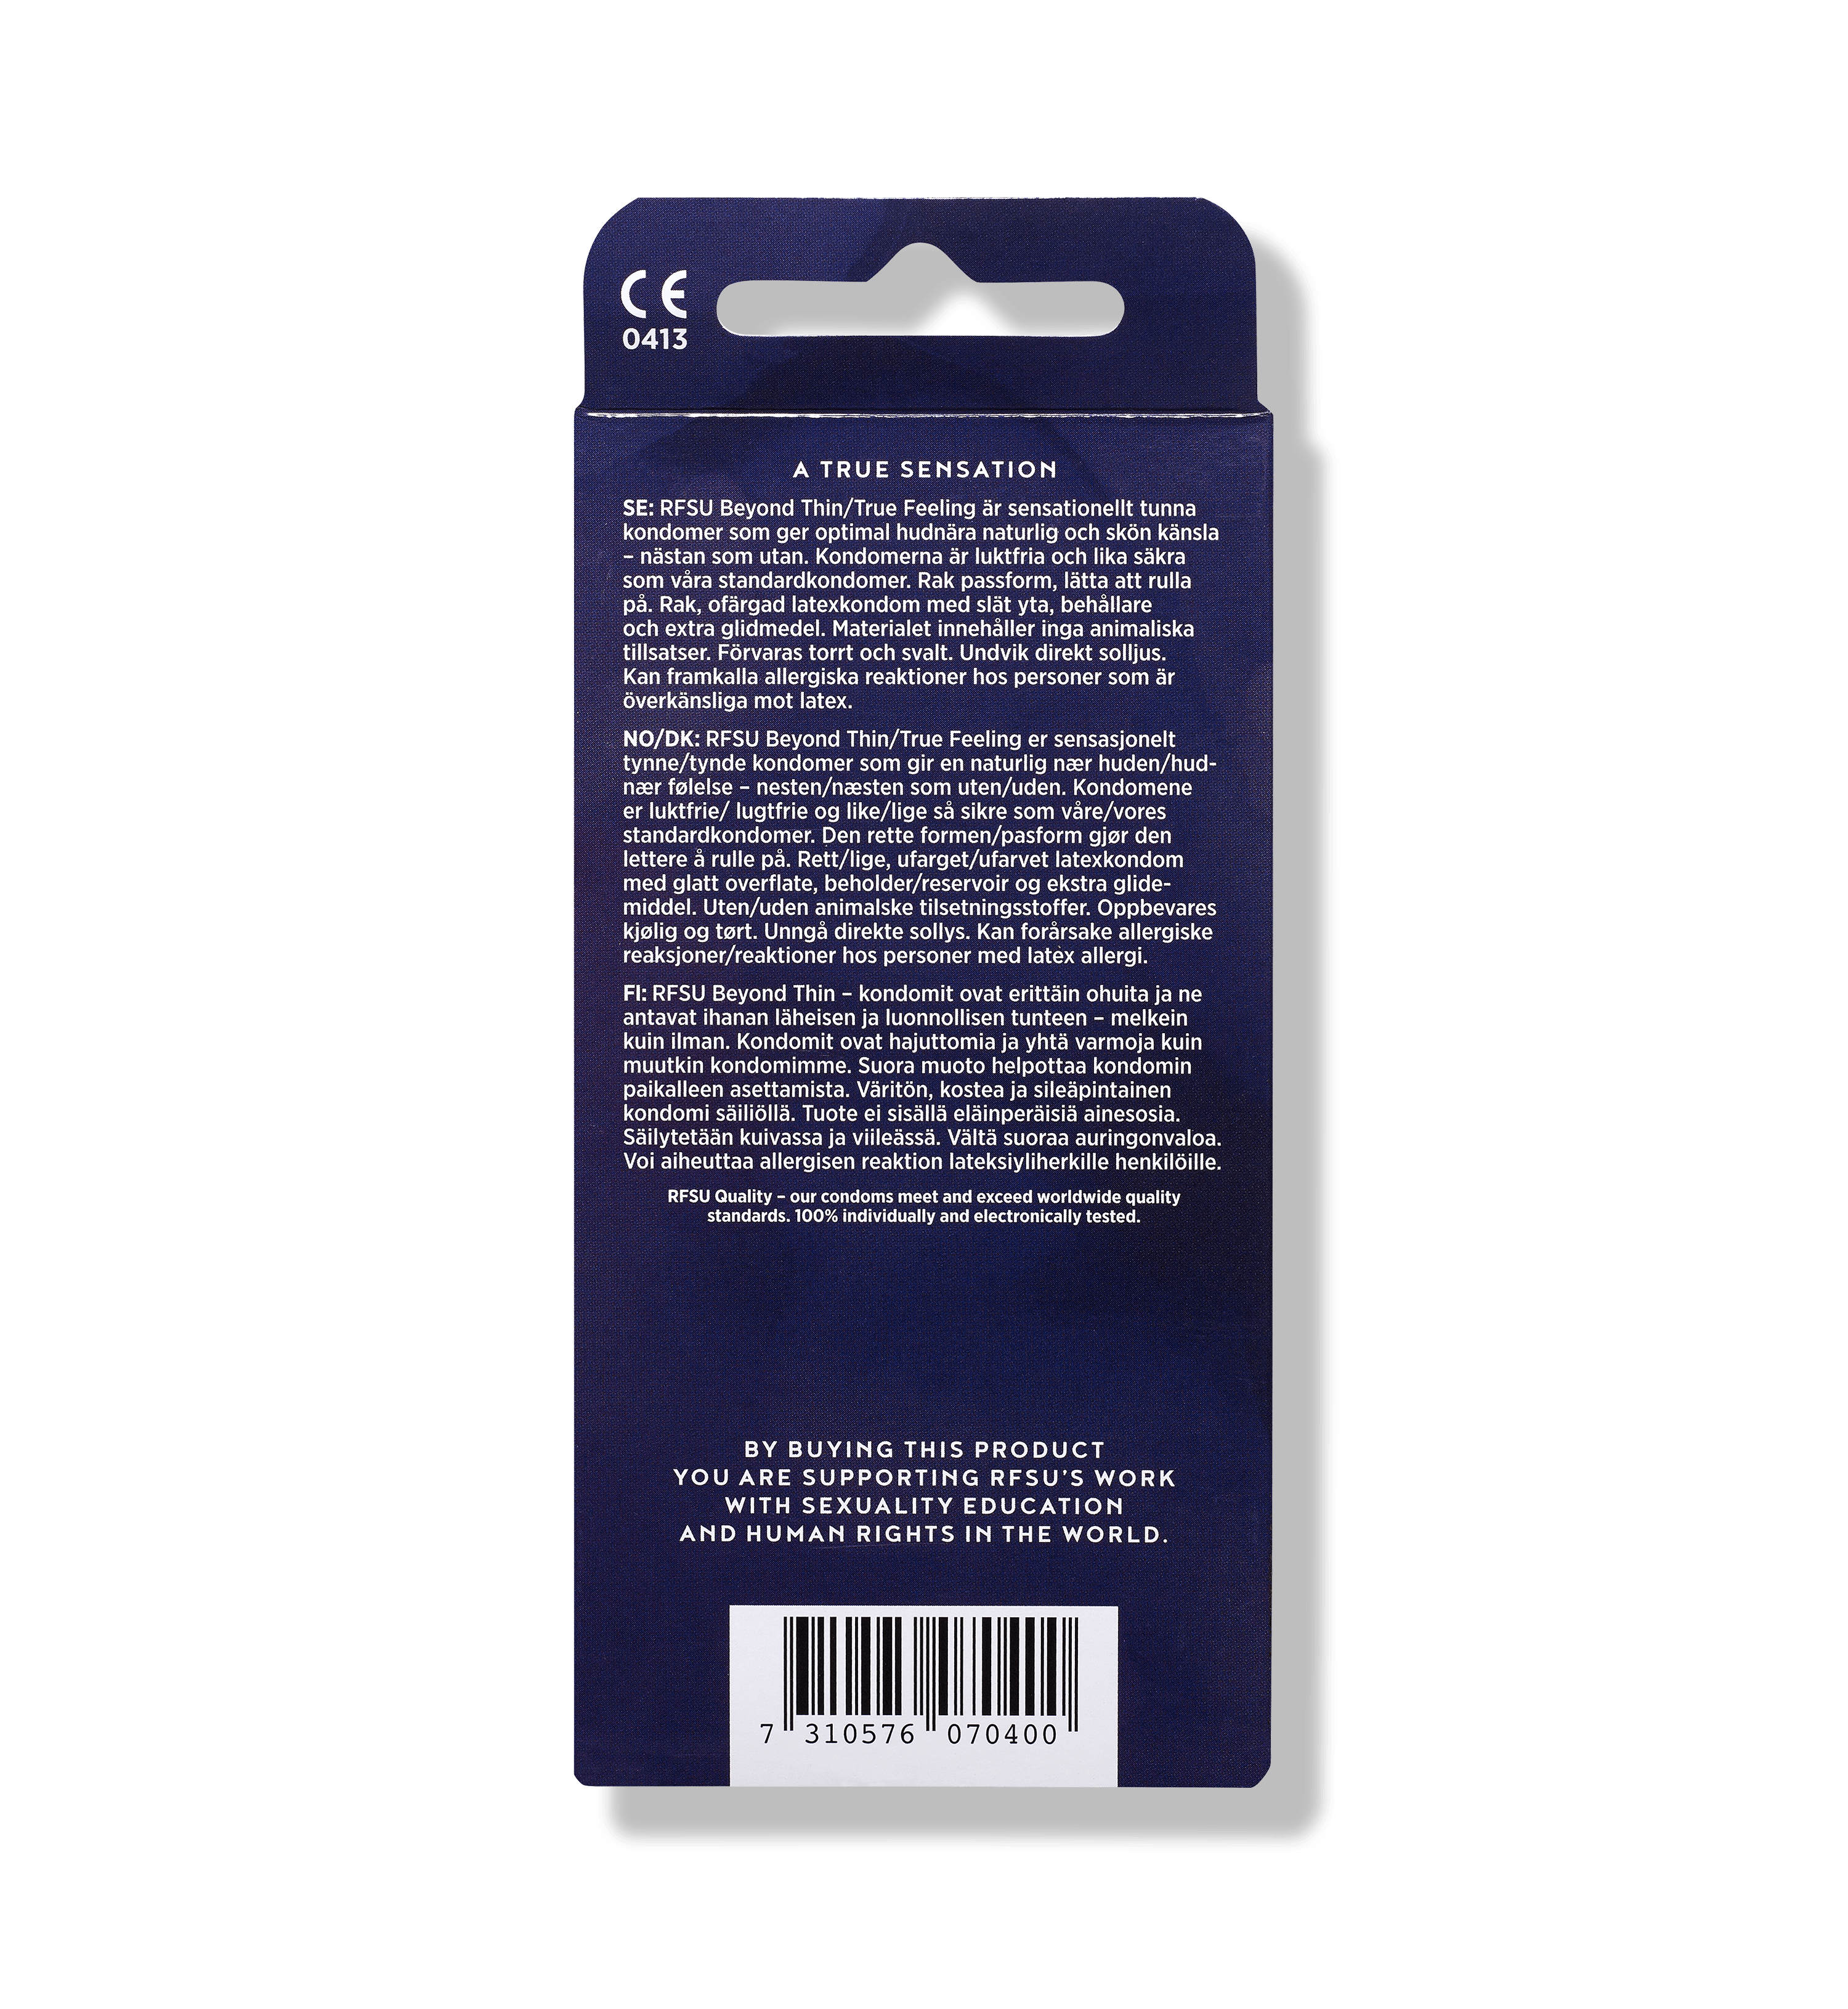 RFSU kondomer Beyond Thin True Feeling 8-pakning